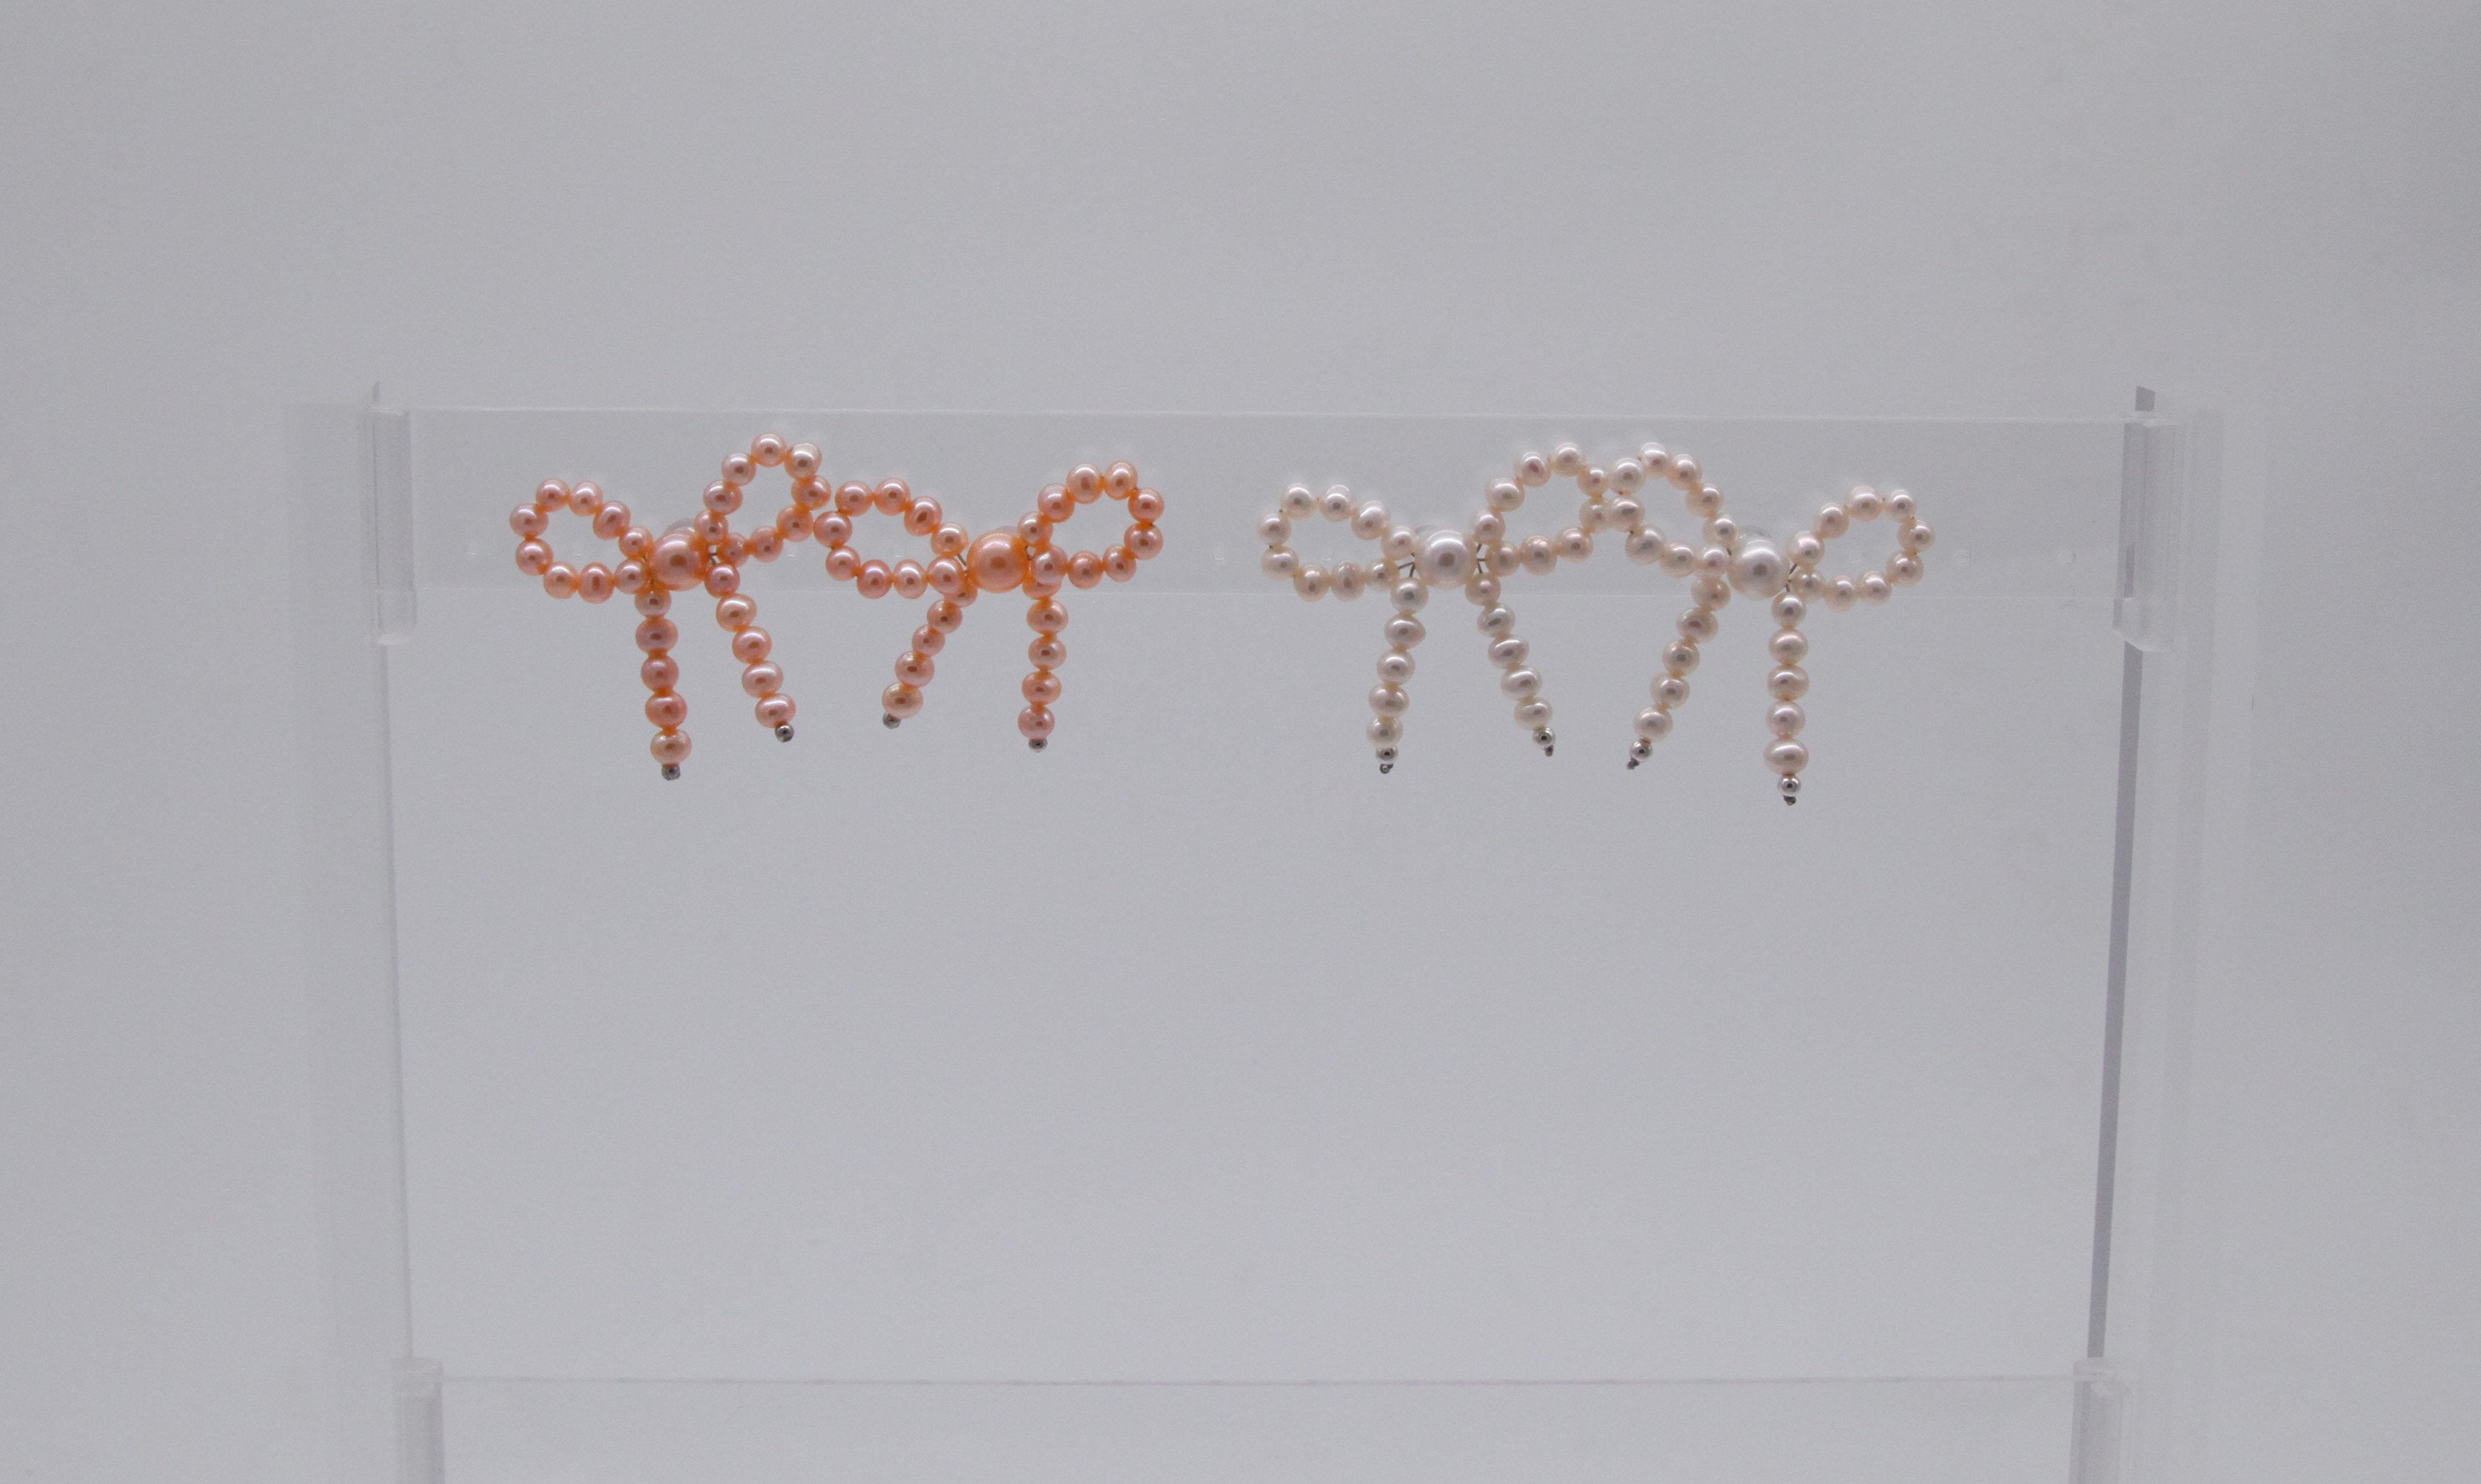 Candy Bowknot Pearl Choker- Earrings Set